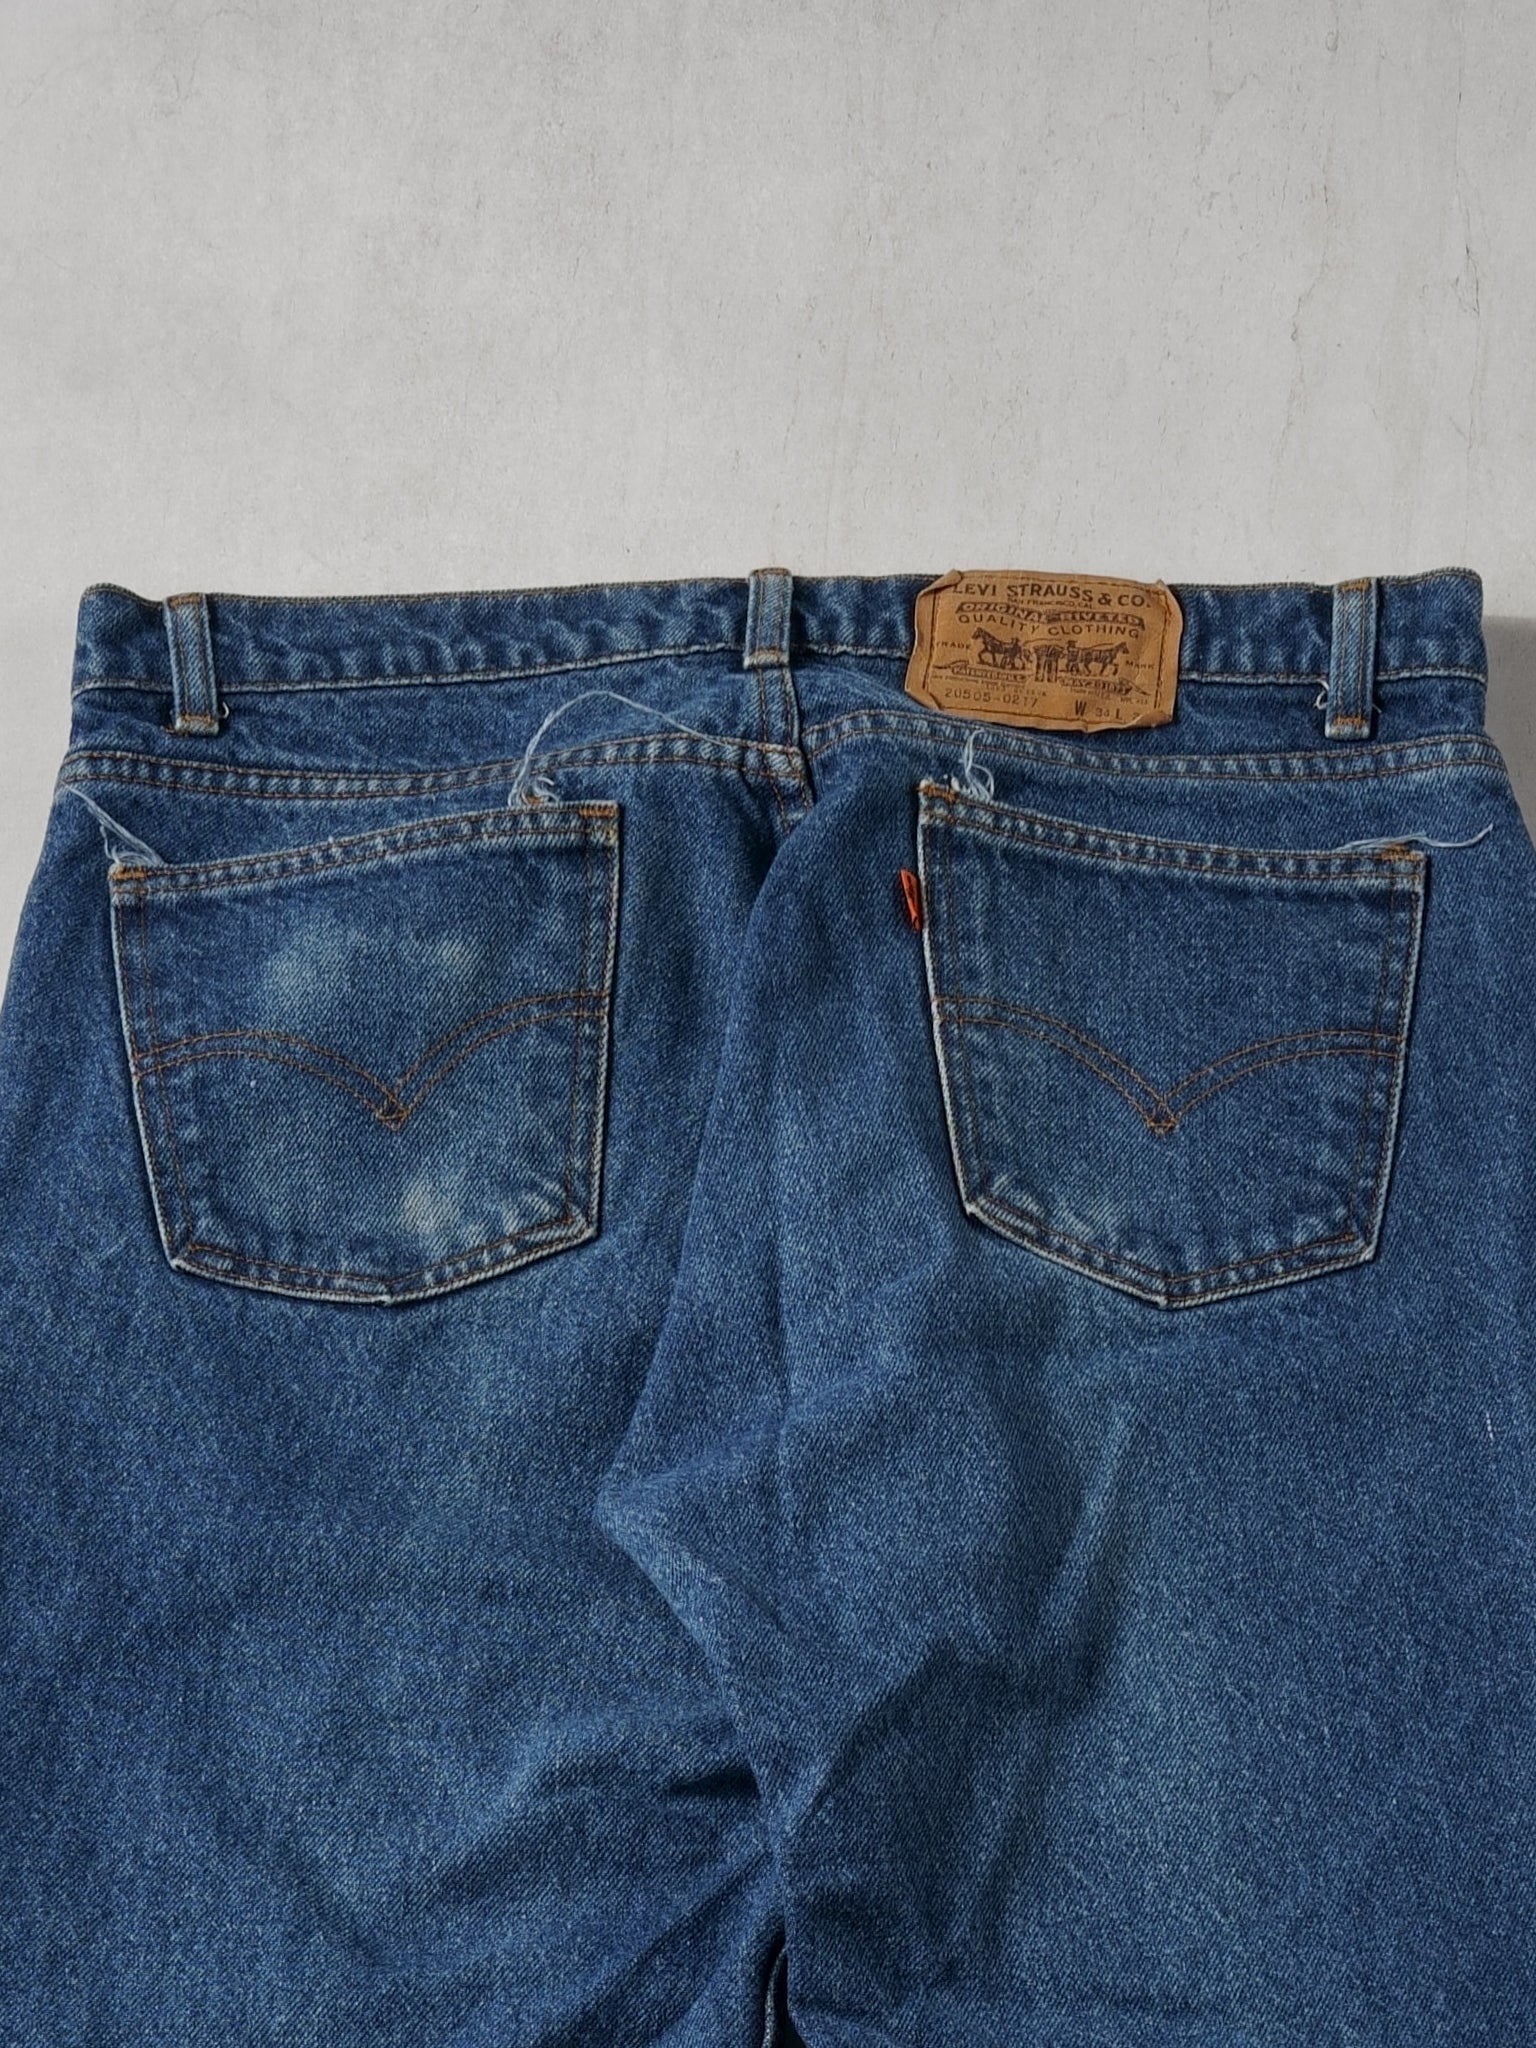 Vintage 70s Dark Blue Levi's 505 Denim Jeans (32x30)